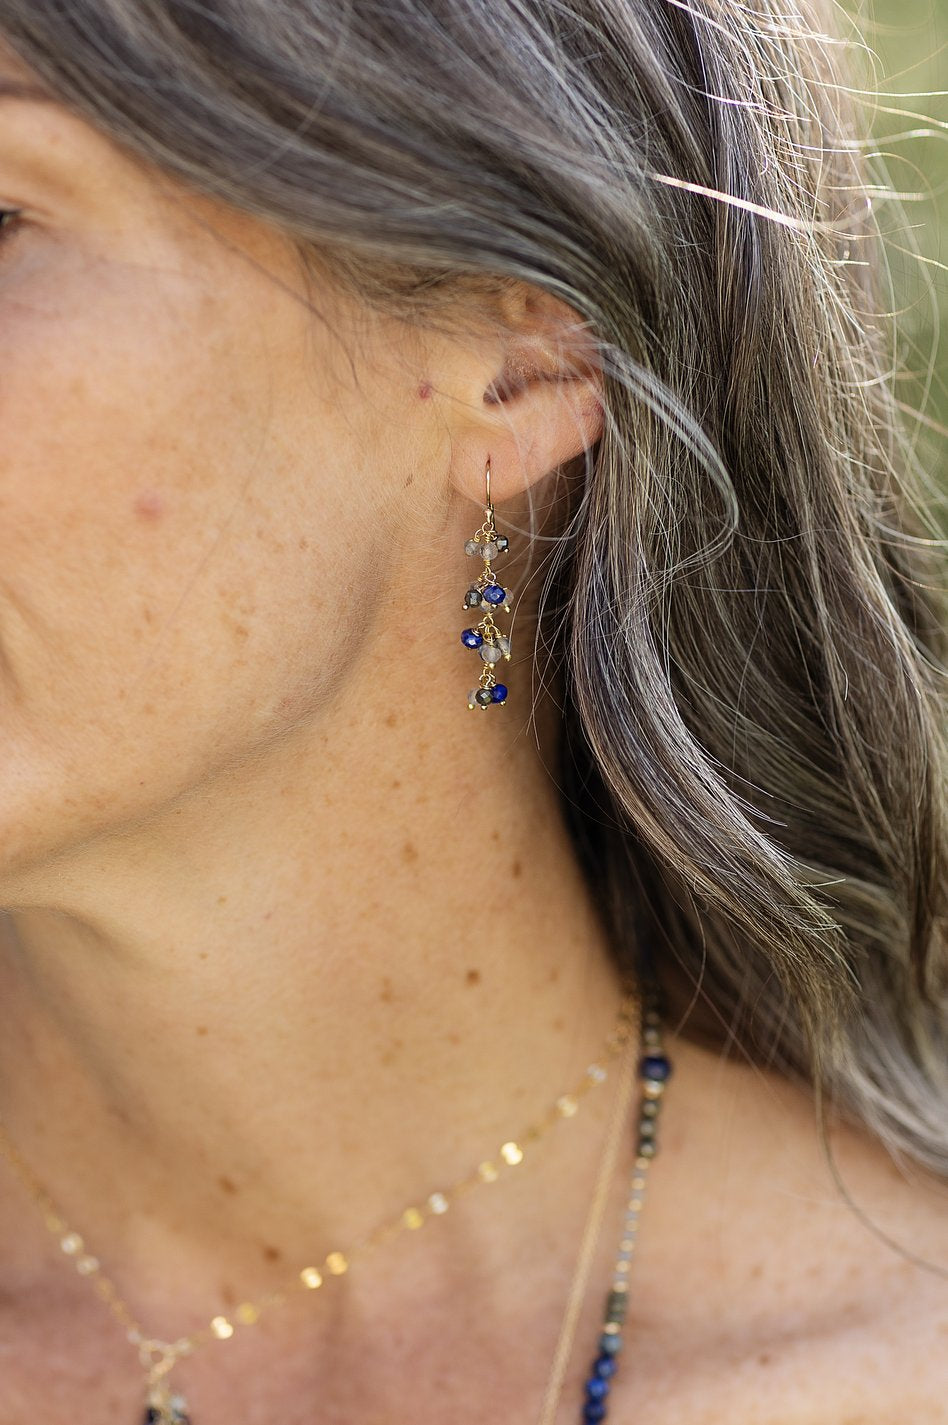 Blue Moon Labradorite Pyrite Cluster Earrings